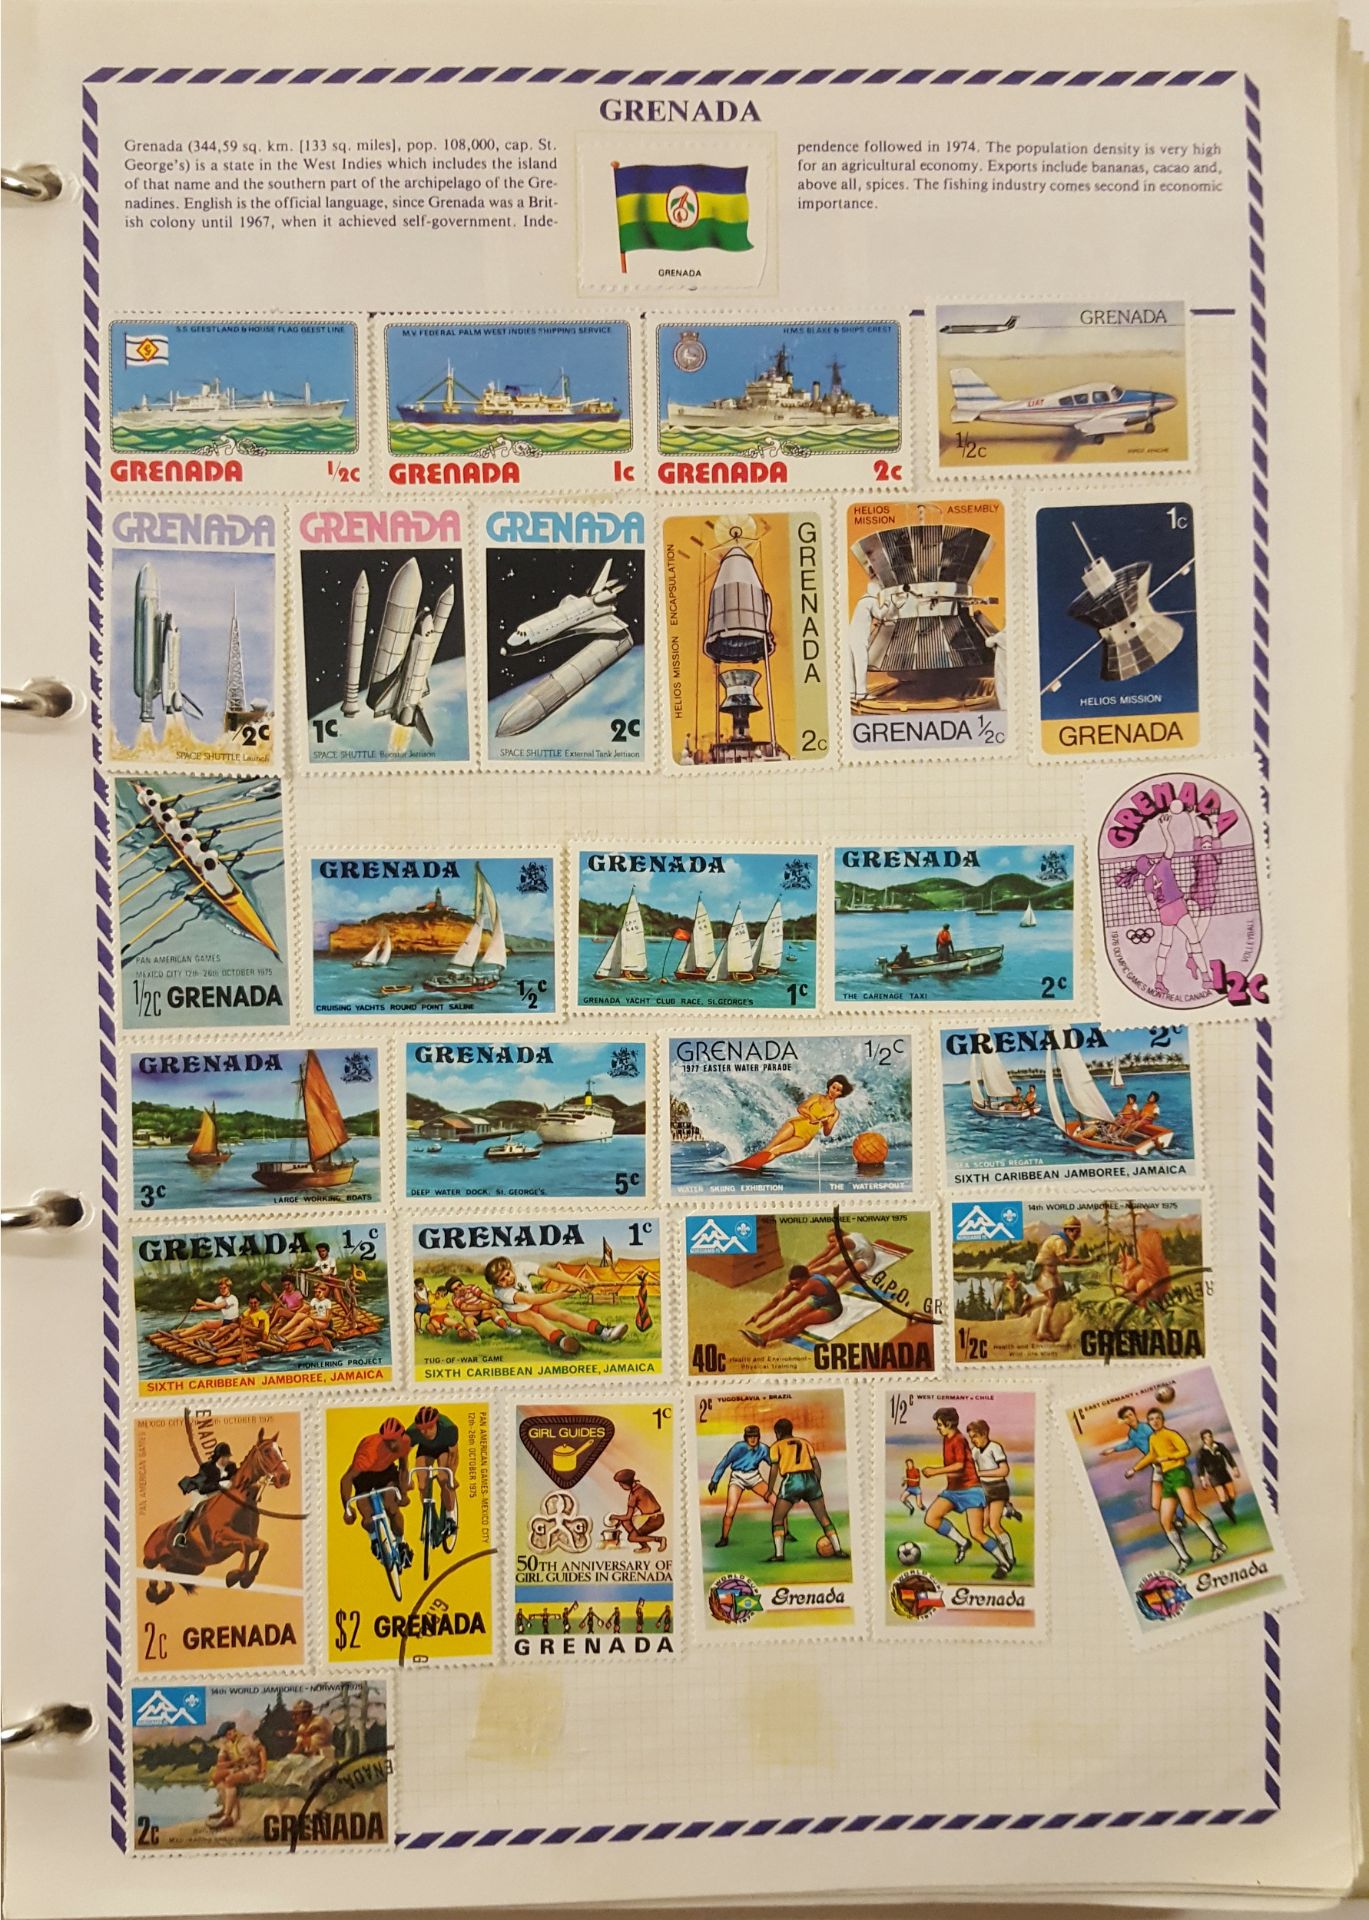 Philatelia Stamp Album Loose Leaf 600 Plus Great Britain Commonwealth & World Stamps - Image 6 of 8